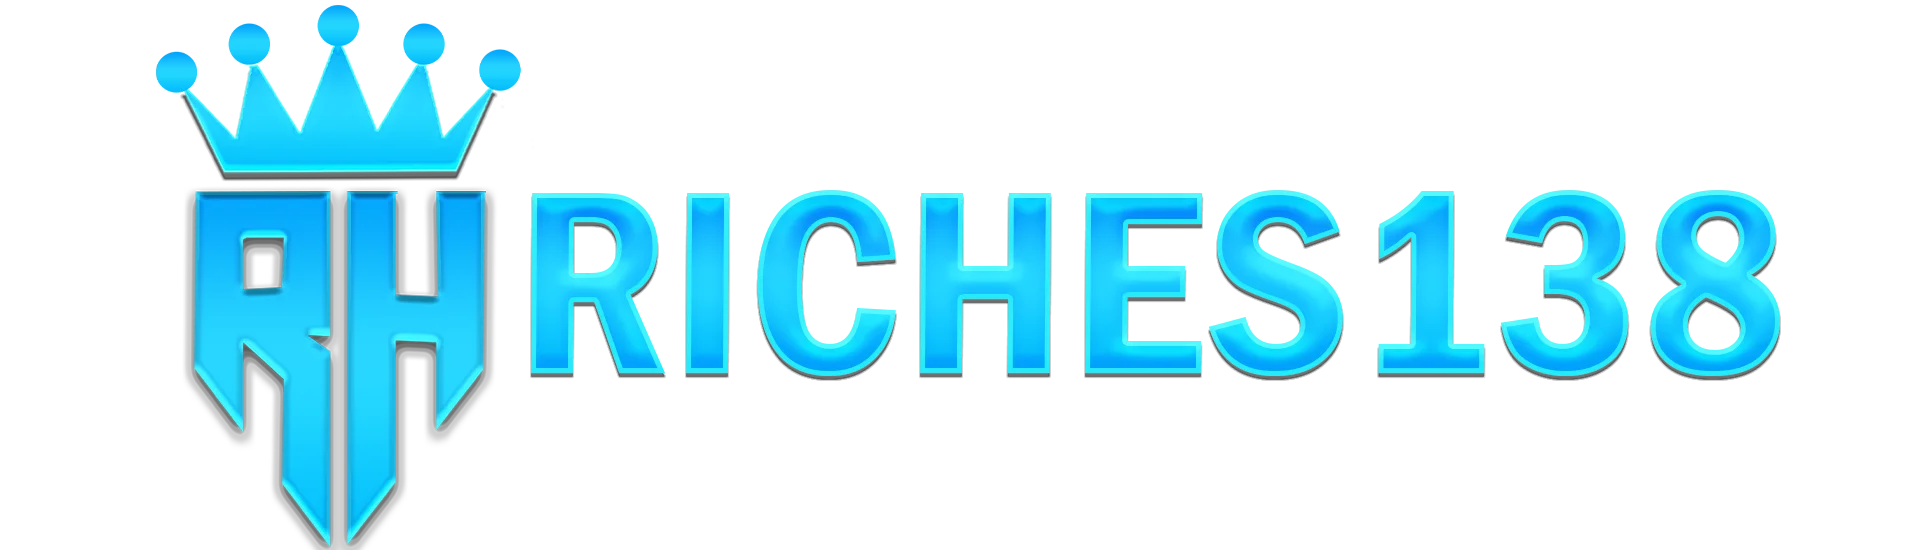 riches138.net